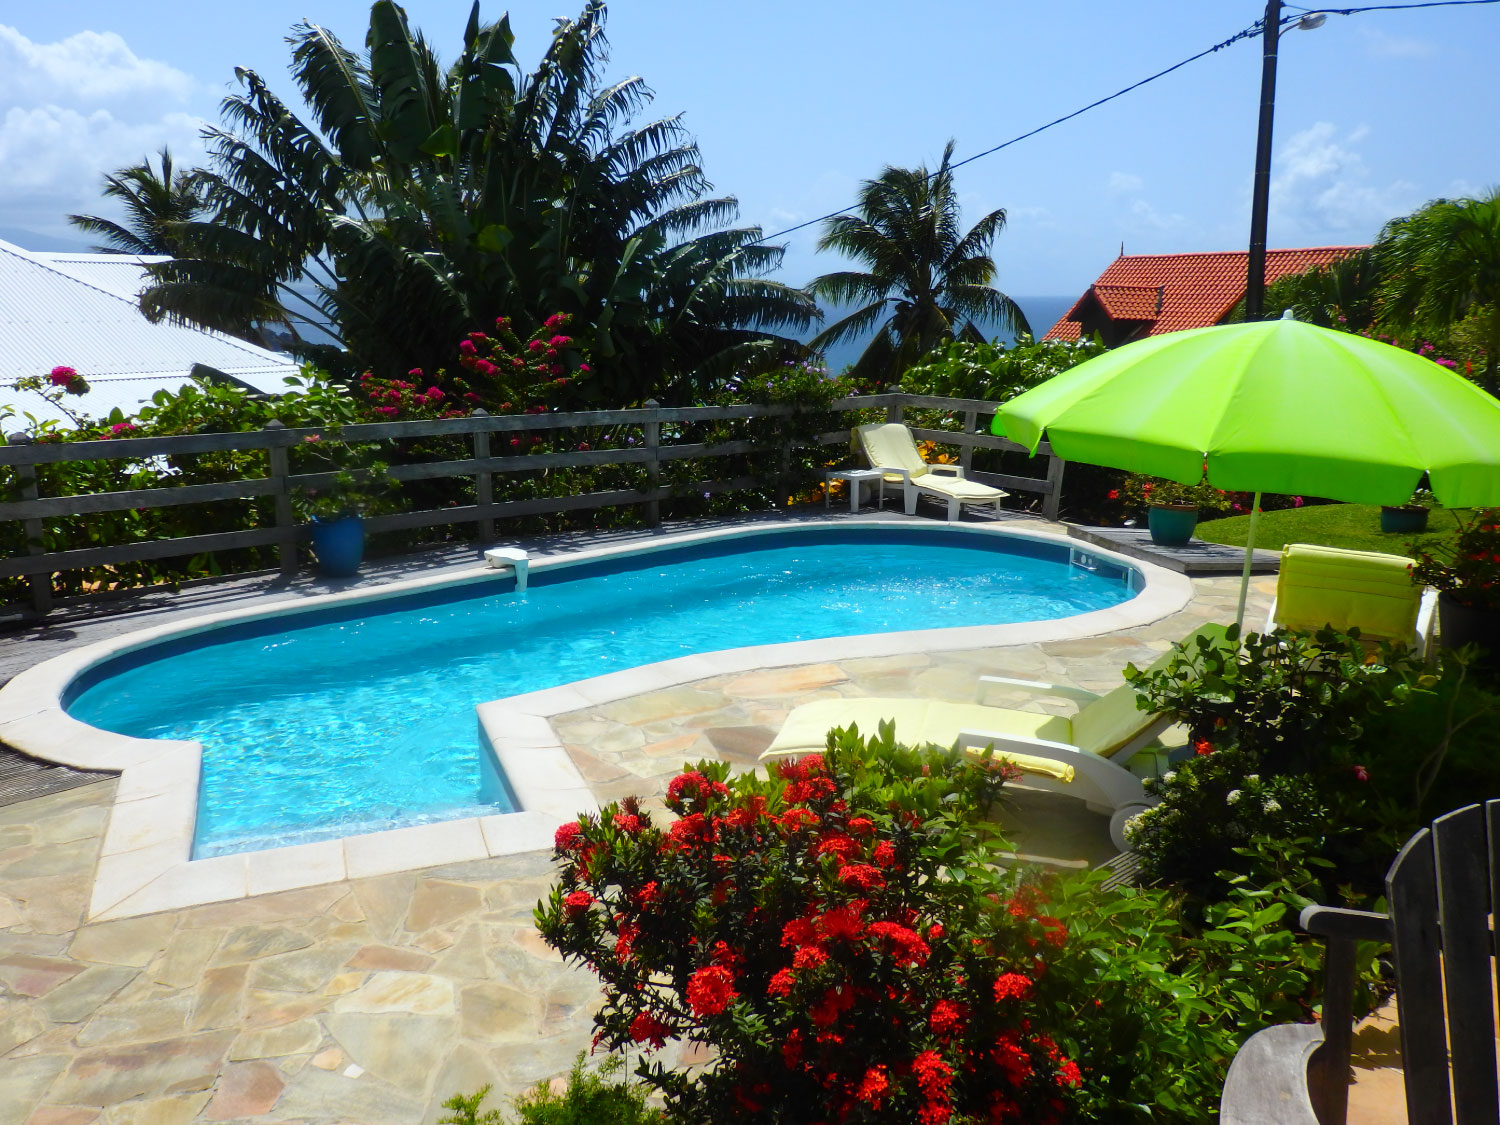 Louer villa vacances en Martinique - VANILLE DES ISLES